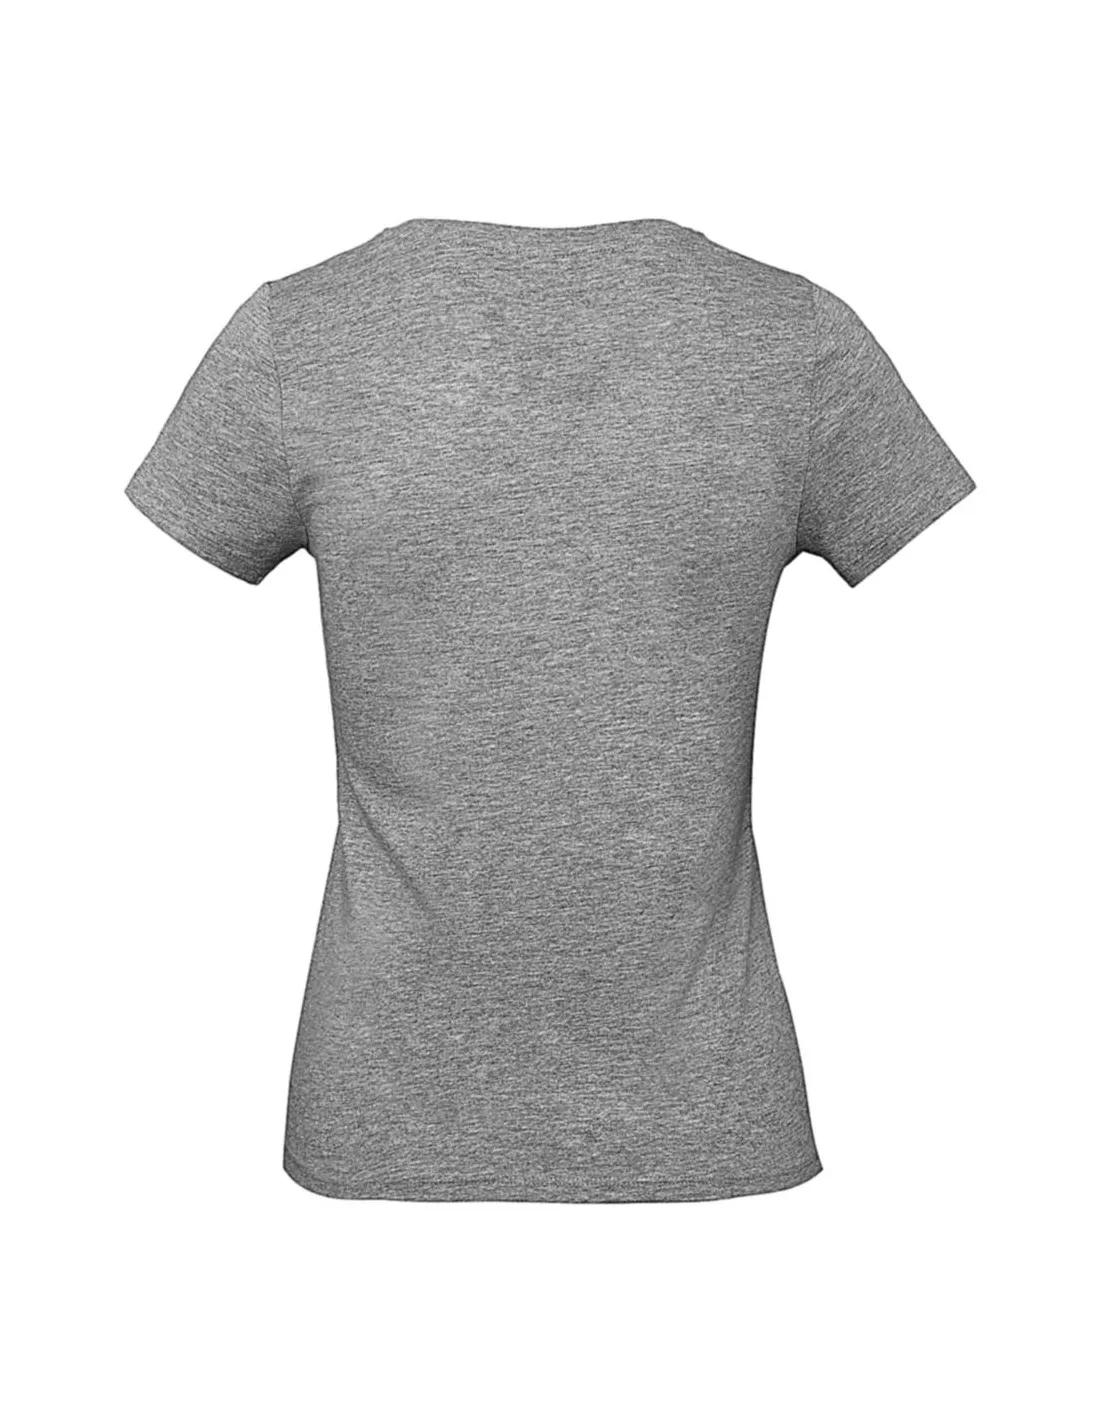 Camiseta manga corta de mujer E190